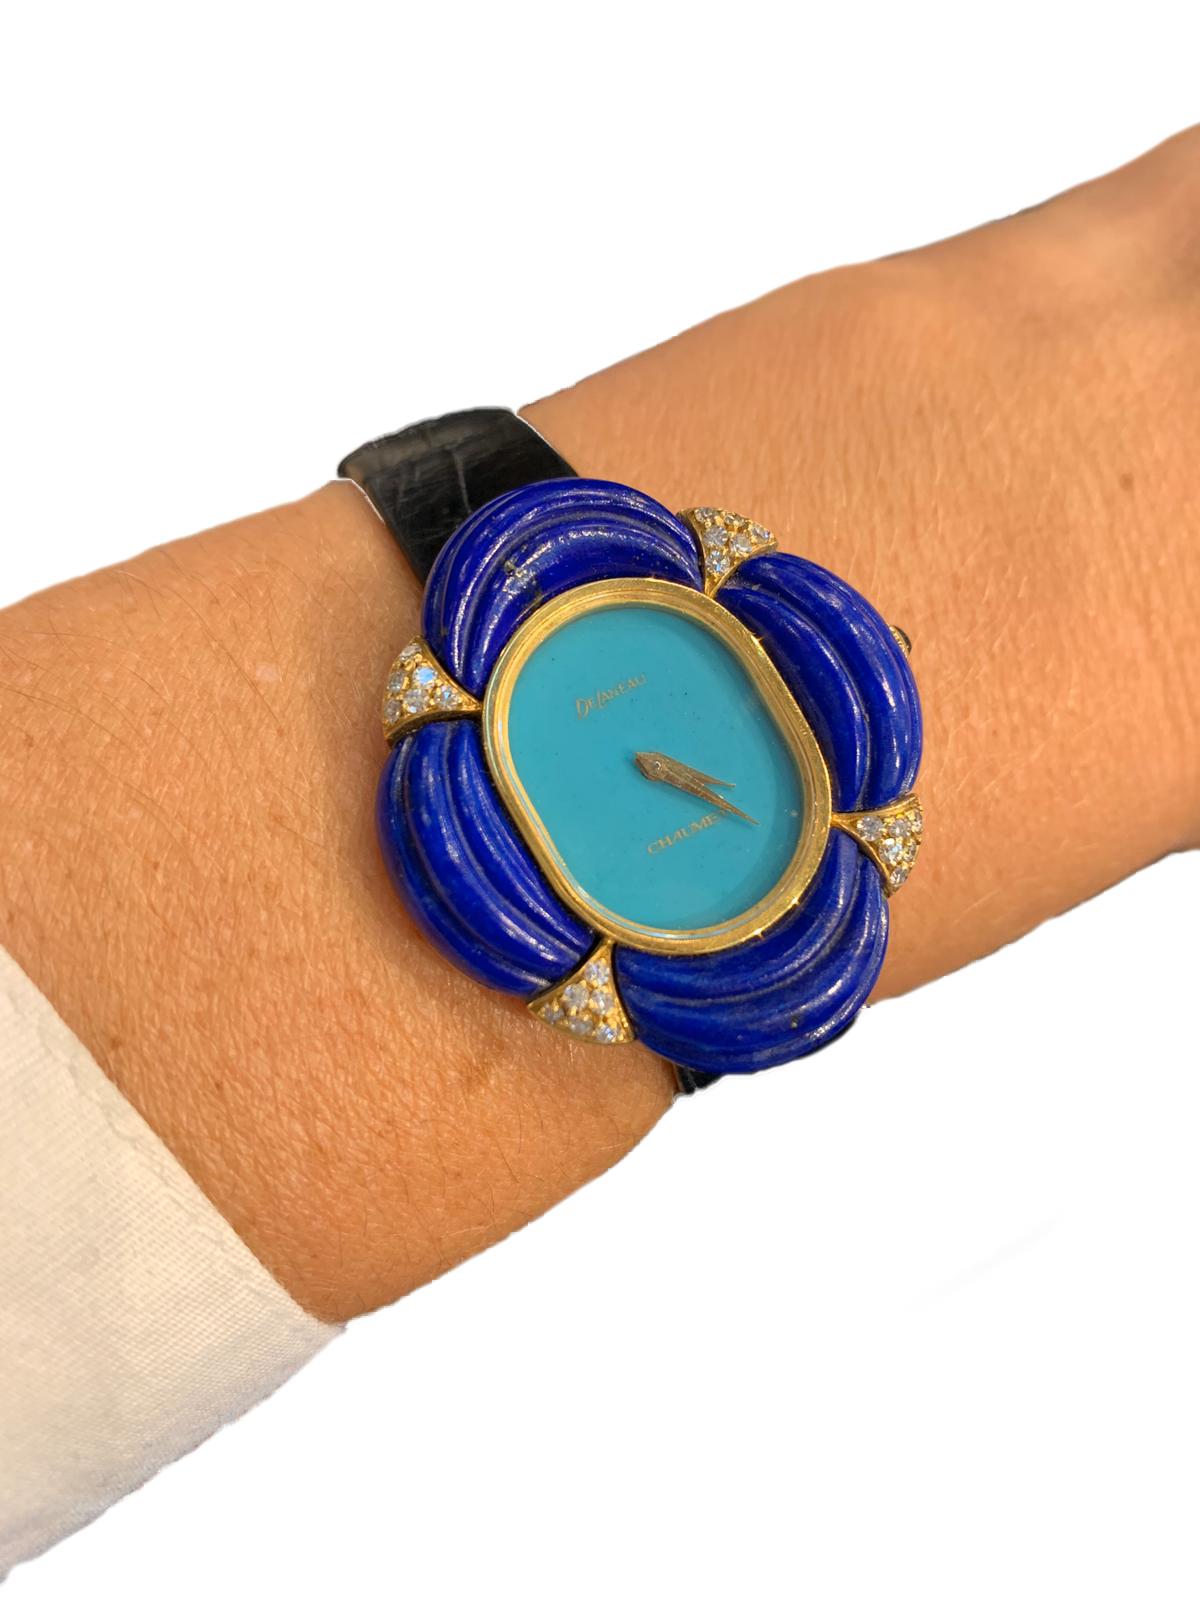 Women's Seventies Chaumet Watch, Diamonds, Lapis Lazuli and Turquoise